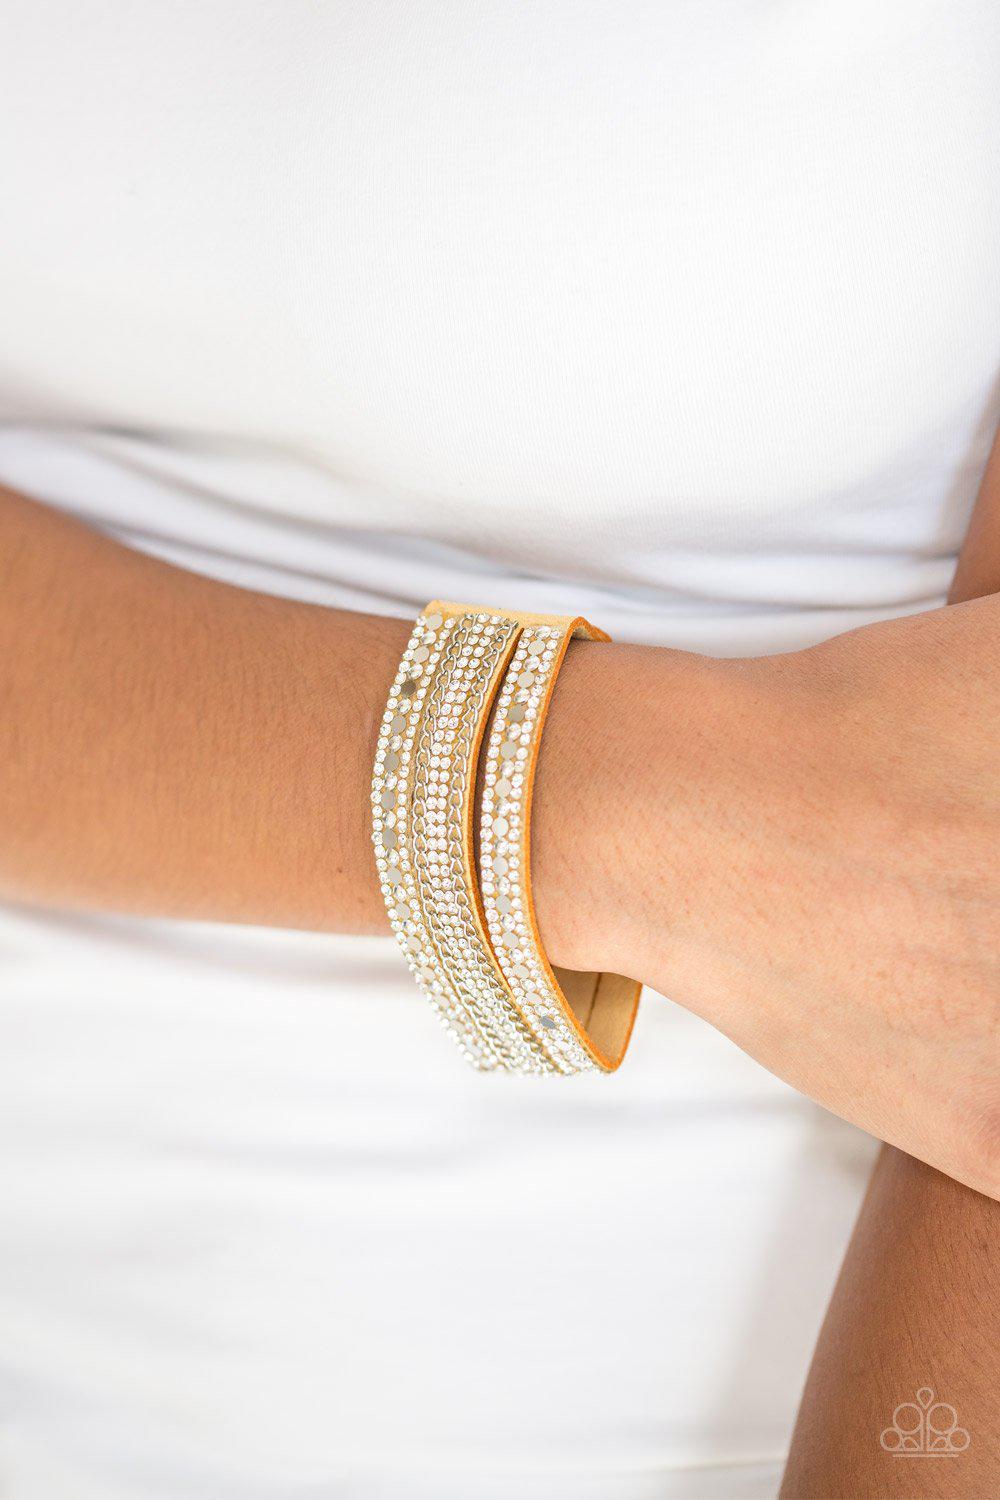 Fashion Fanatic Yellow and White Rhinestone Wrap Snap Bracelet - Paparazzi Accessories-CarasShop.com - $5 Jewelry by Cara Jewels